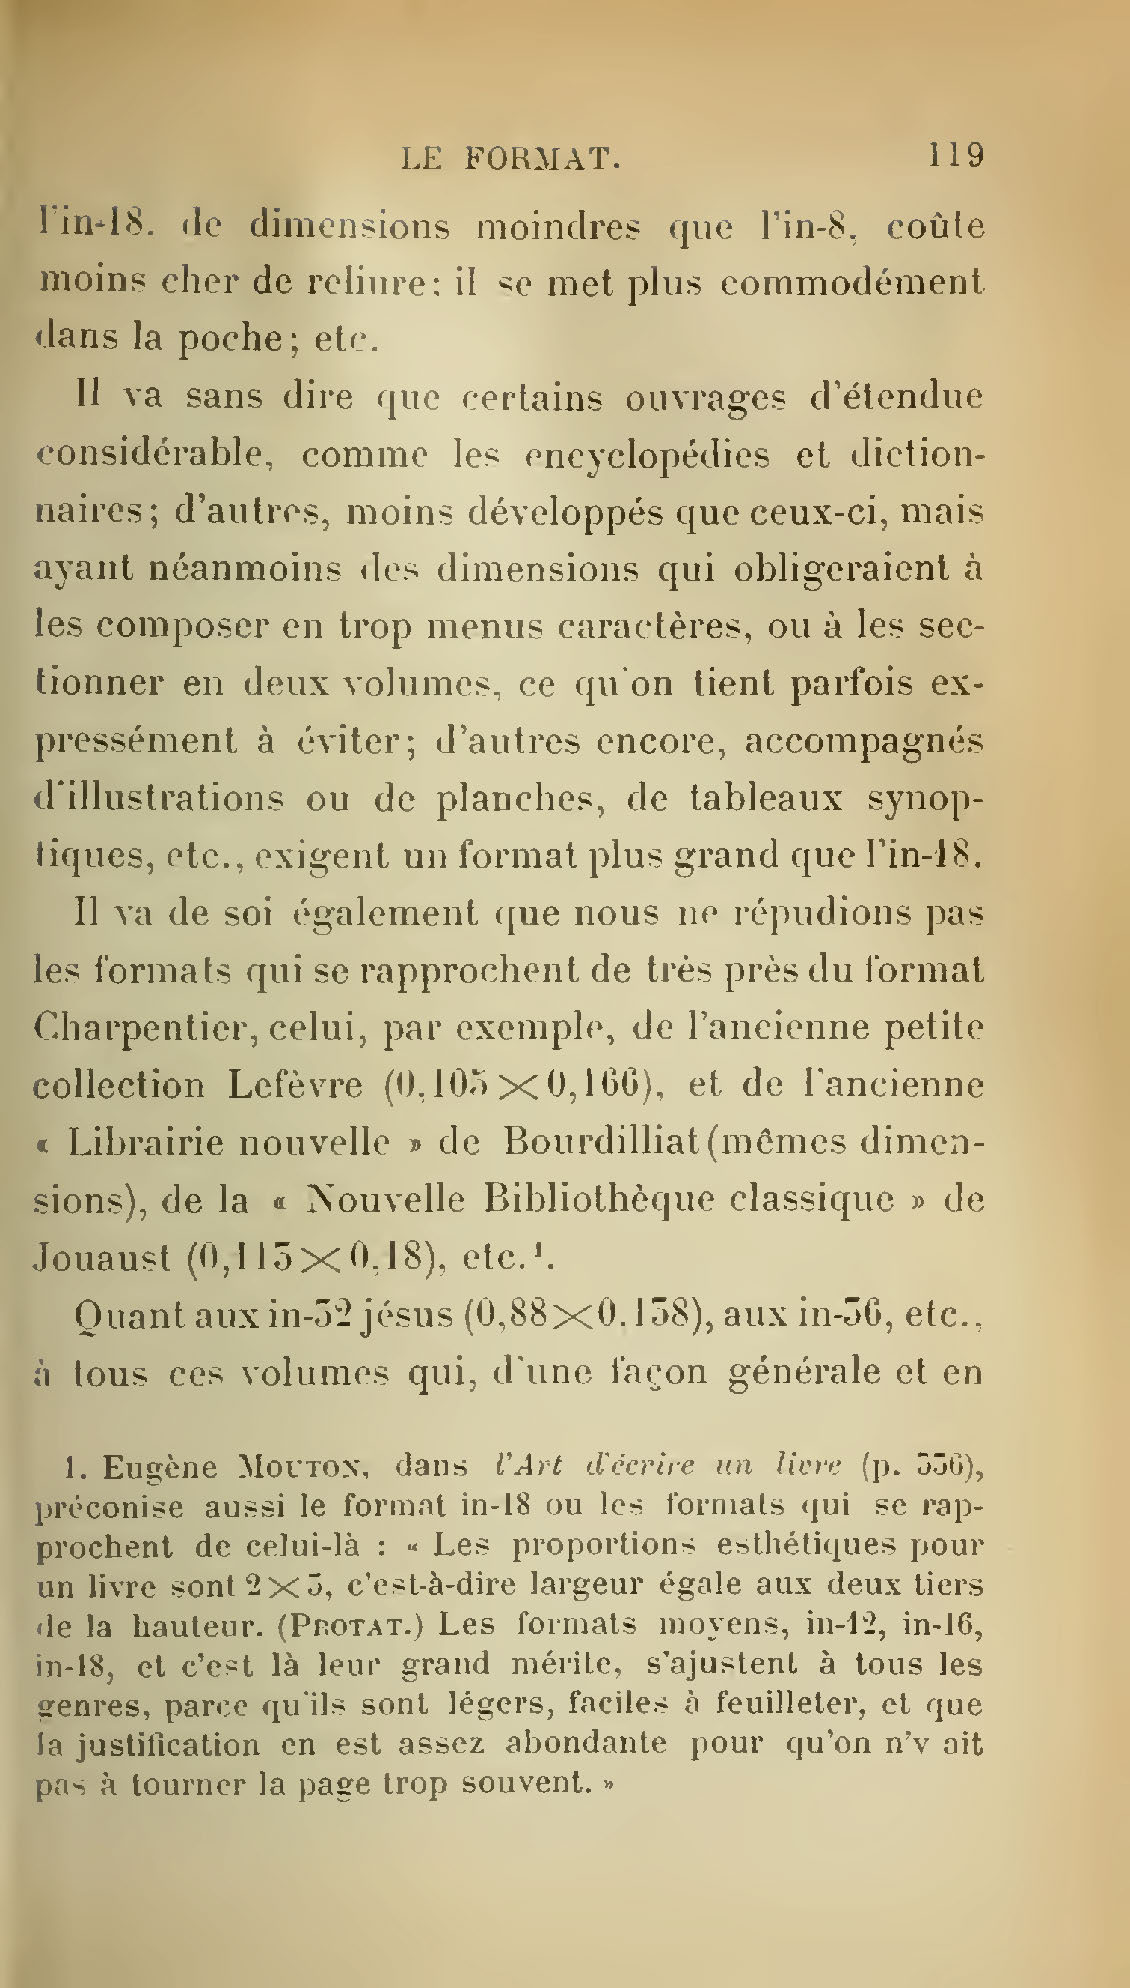 Albert Cim, Le Livre, t. III, p. 119.